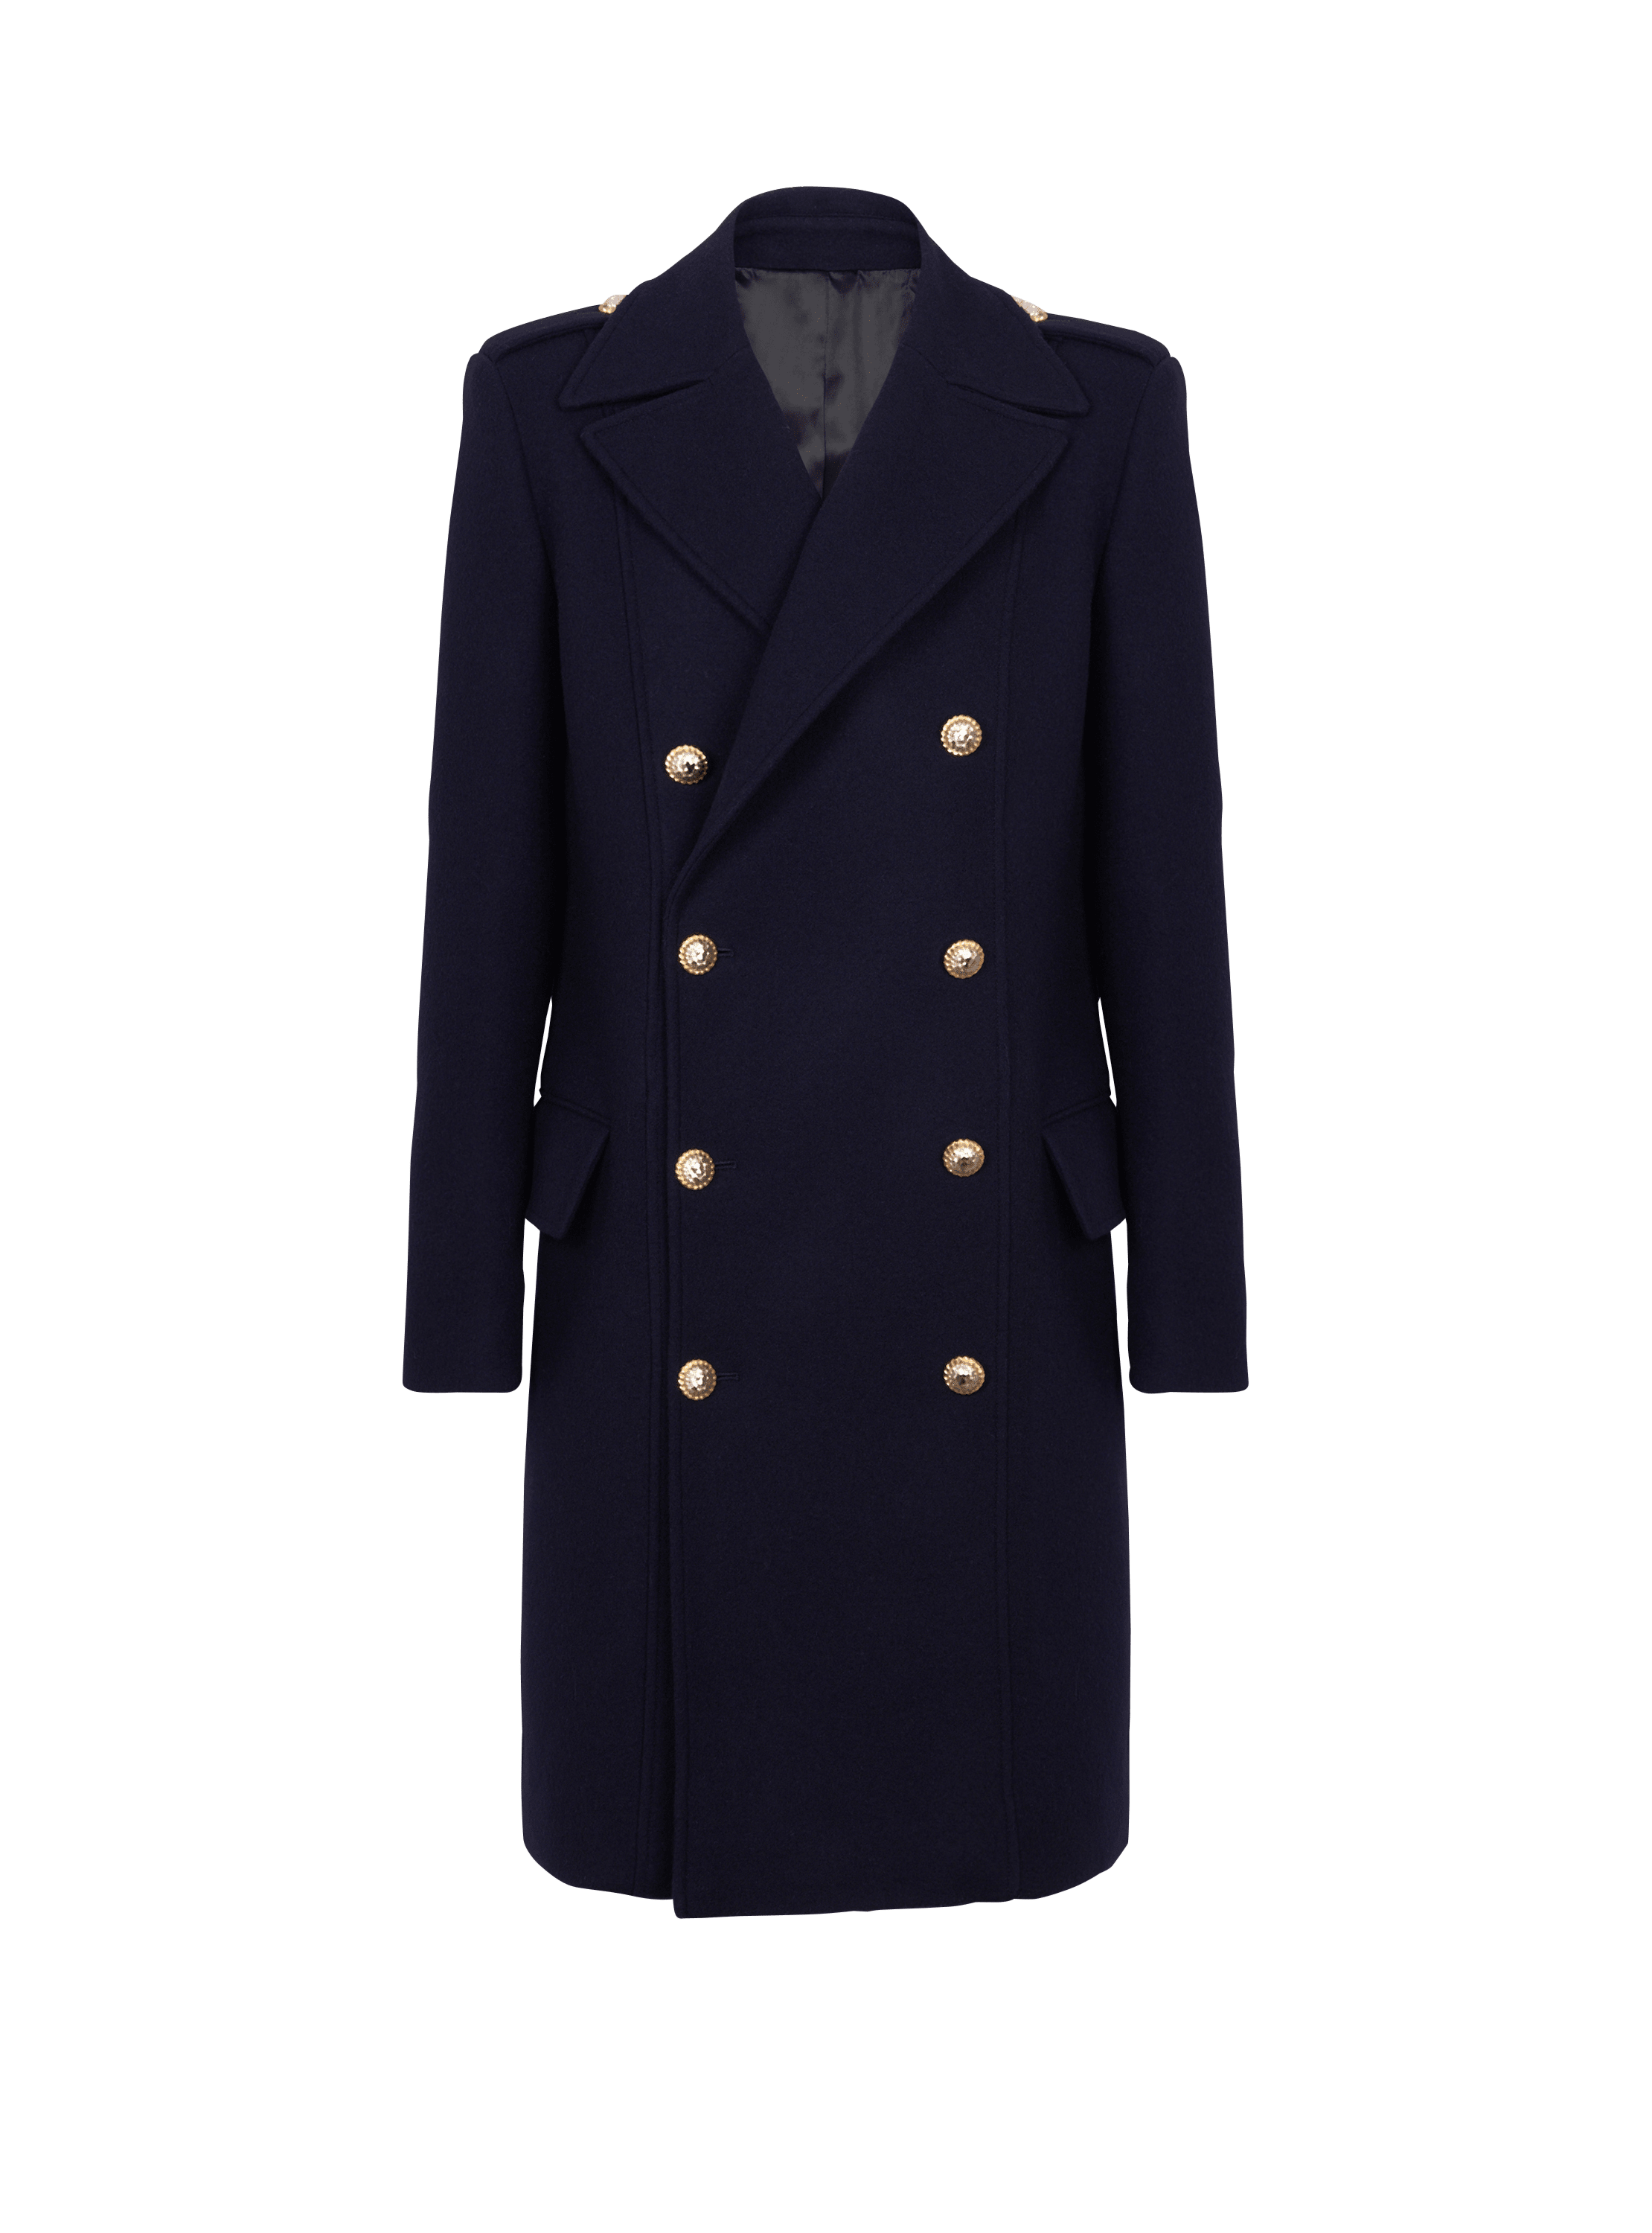 Mantel aus doppeltem Wollfilz